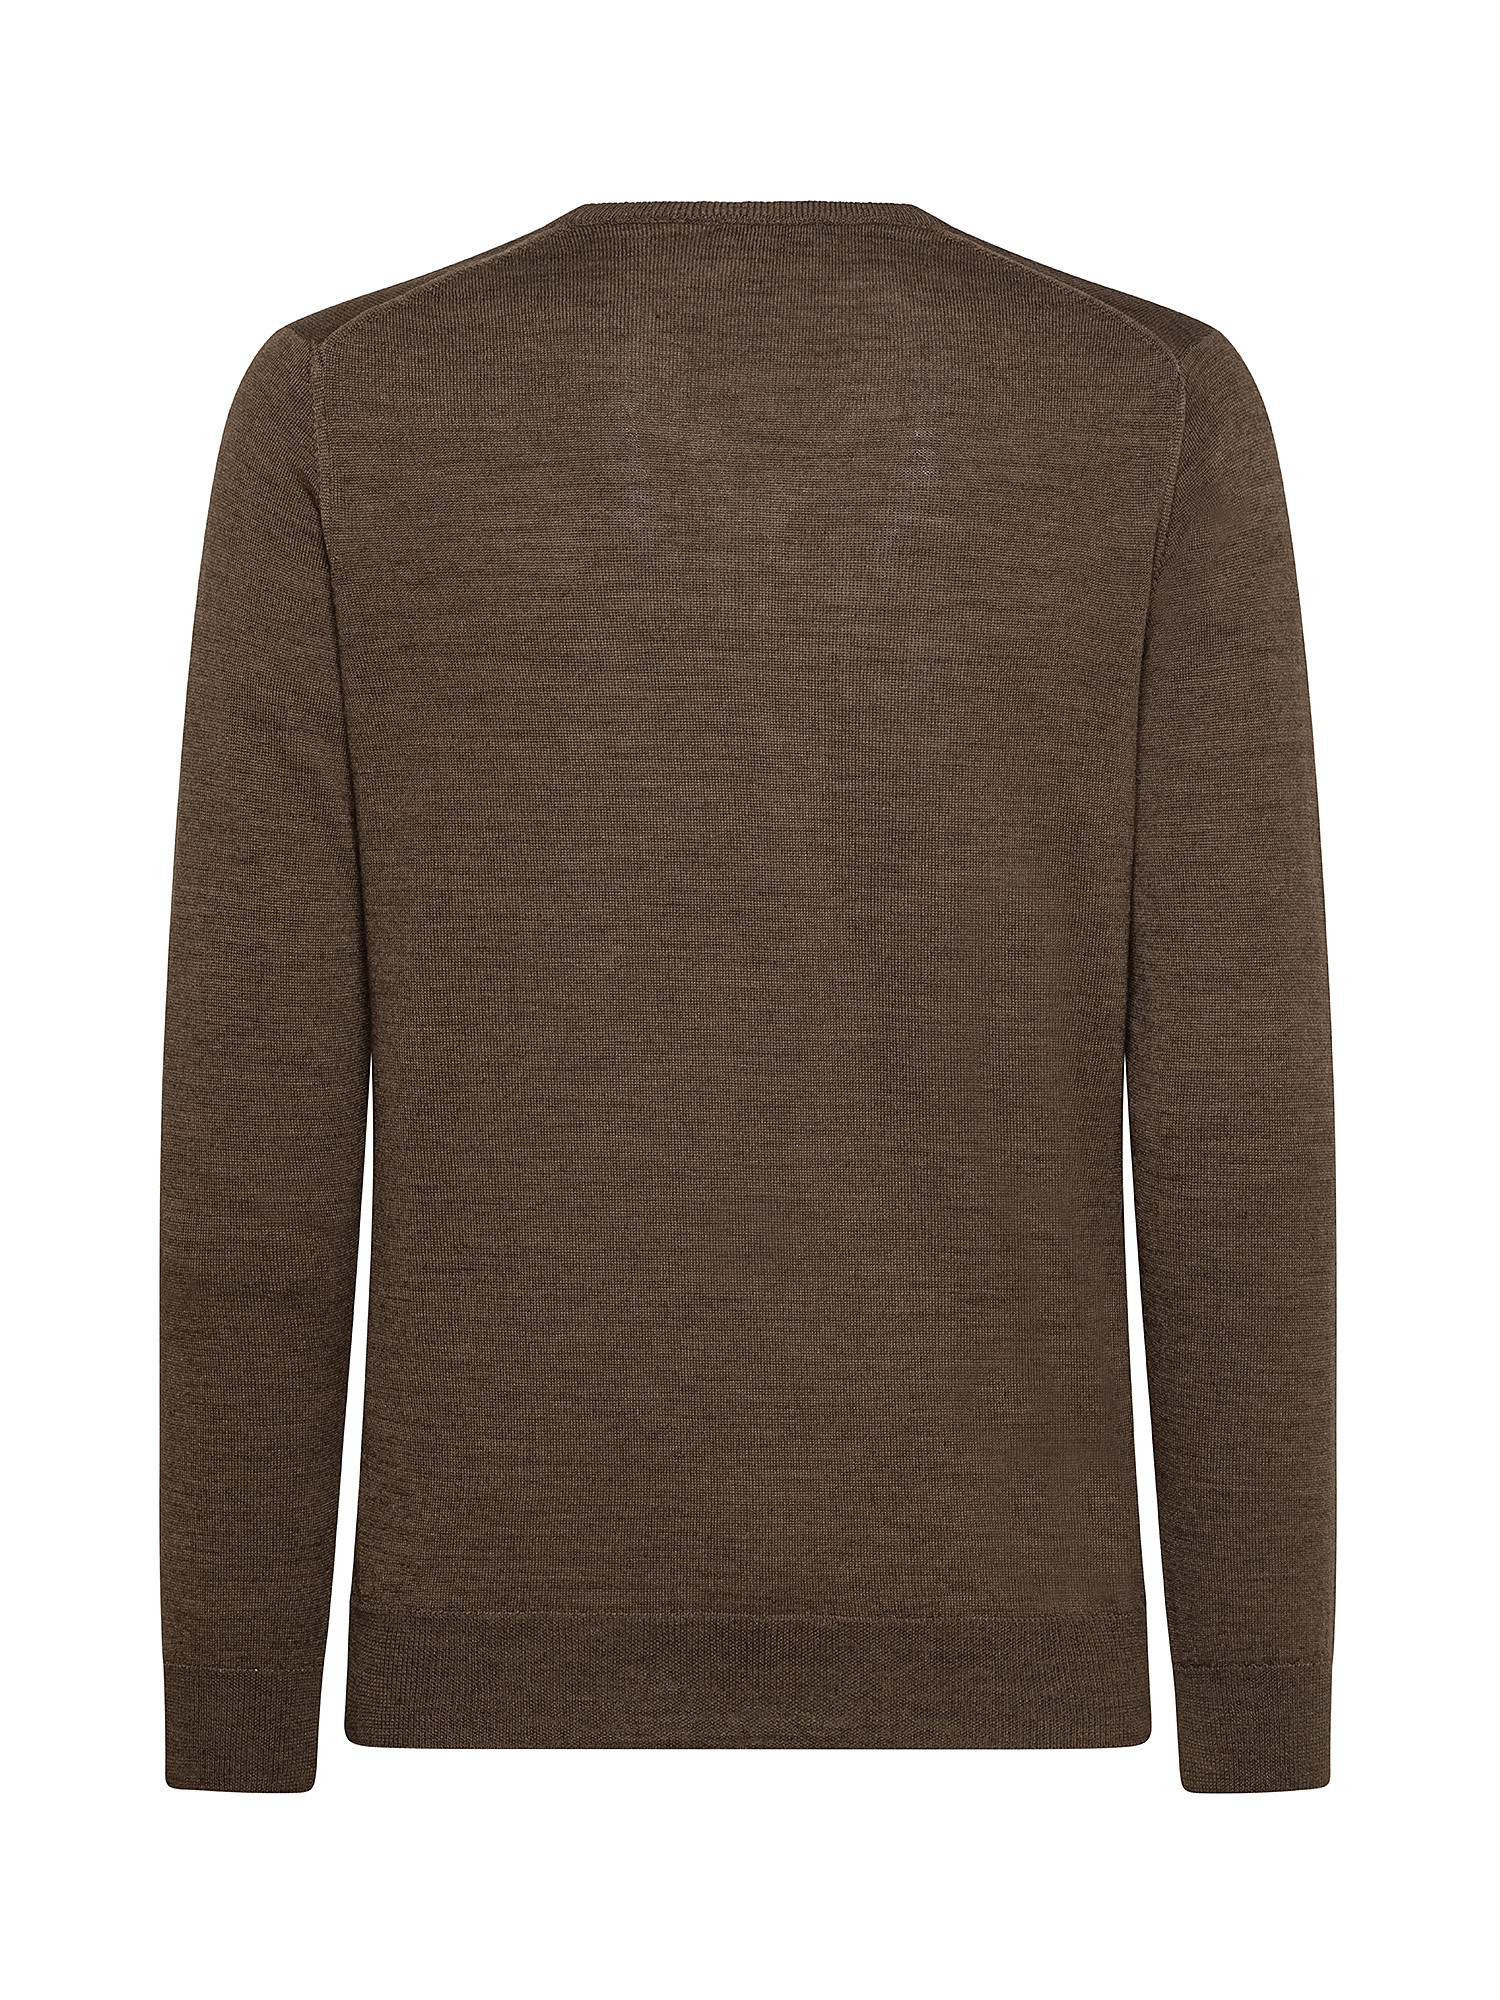 Merino Blend V-neck sweater - Machine washable, Hazelnut Brown, large image number 1